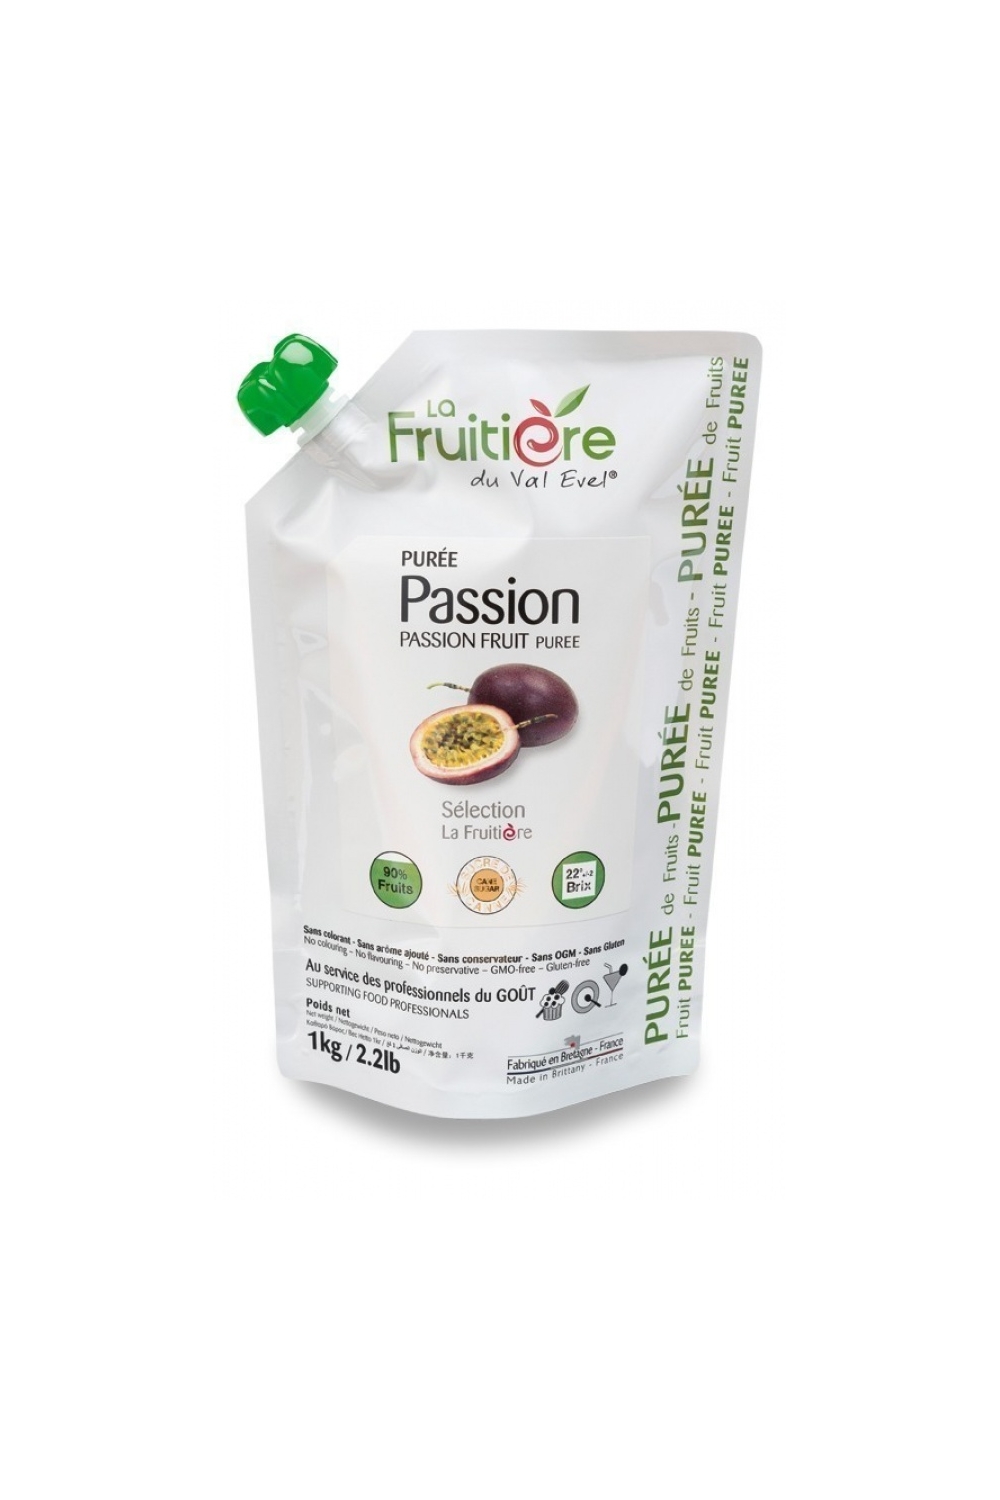 Passion Fruit Puree: 1kg – Pacific Gourmet